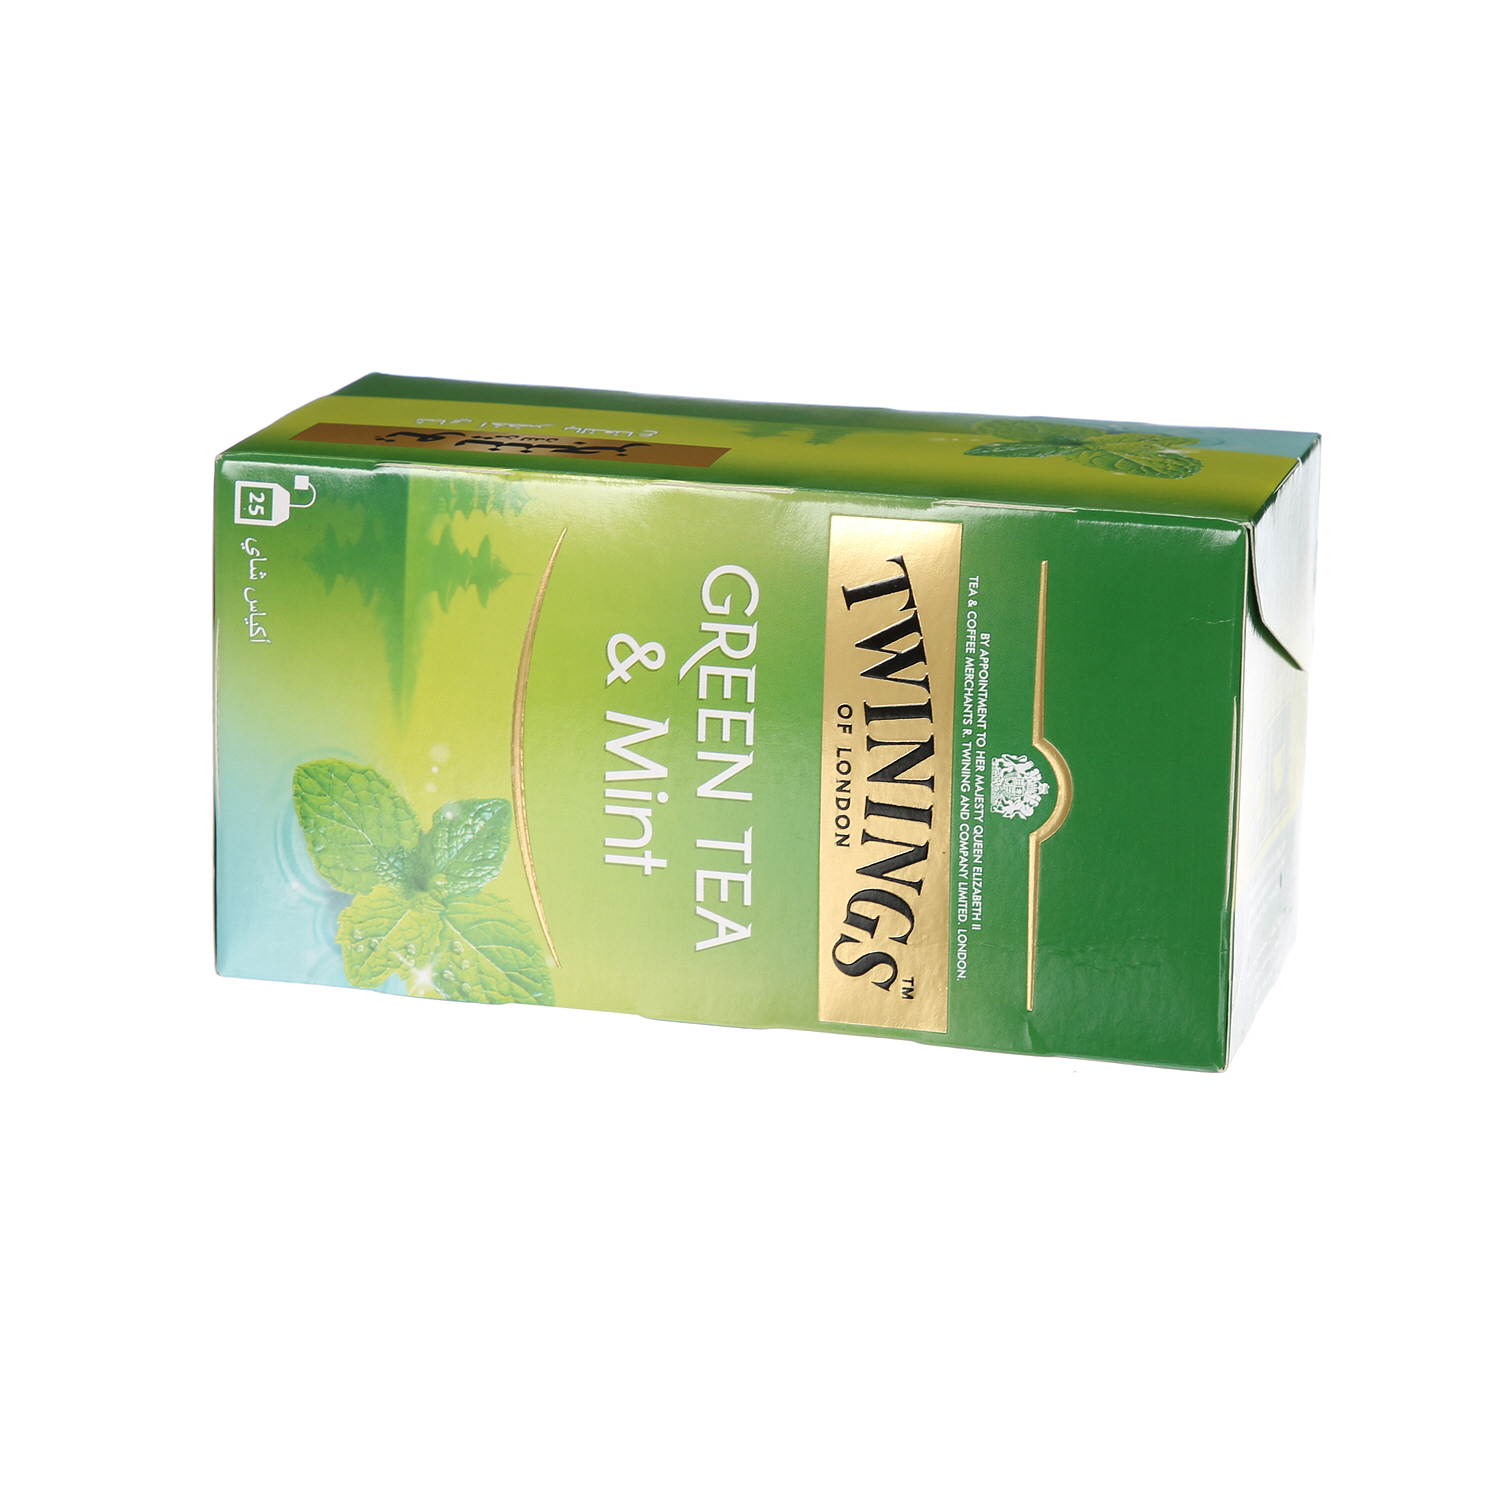 Twinings Green Tea and Mint 25 Tea Bags